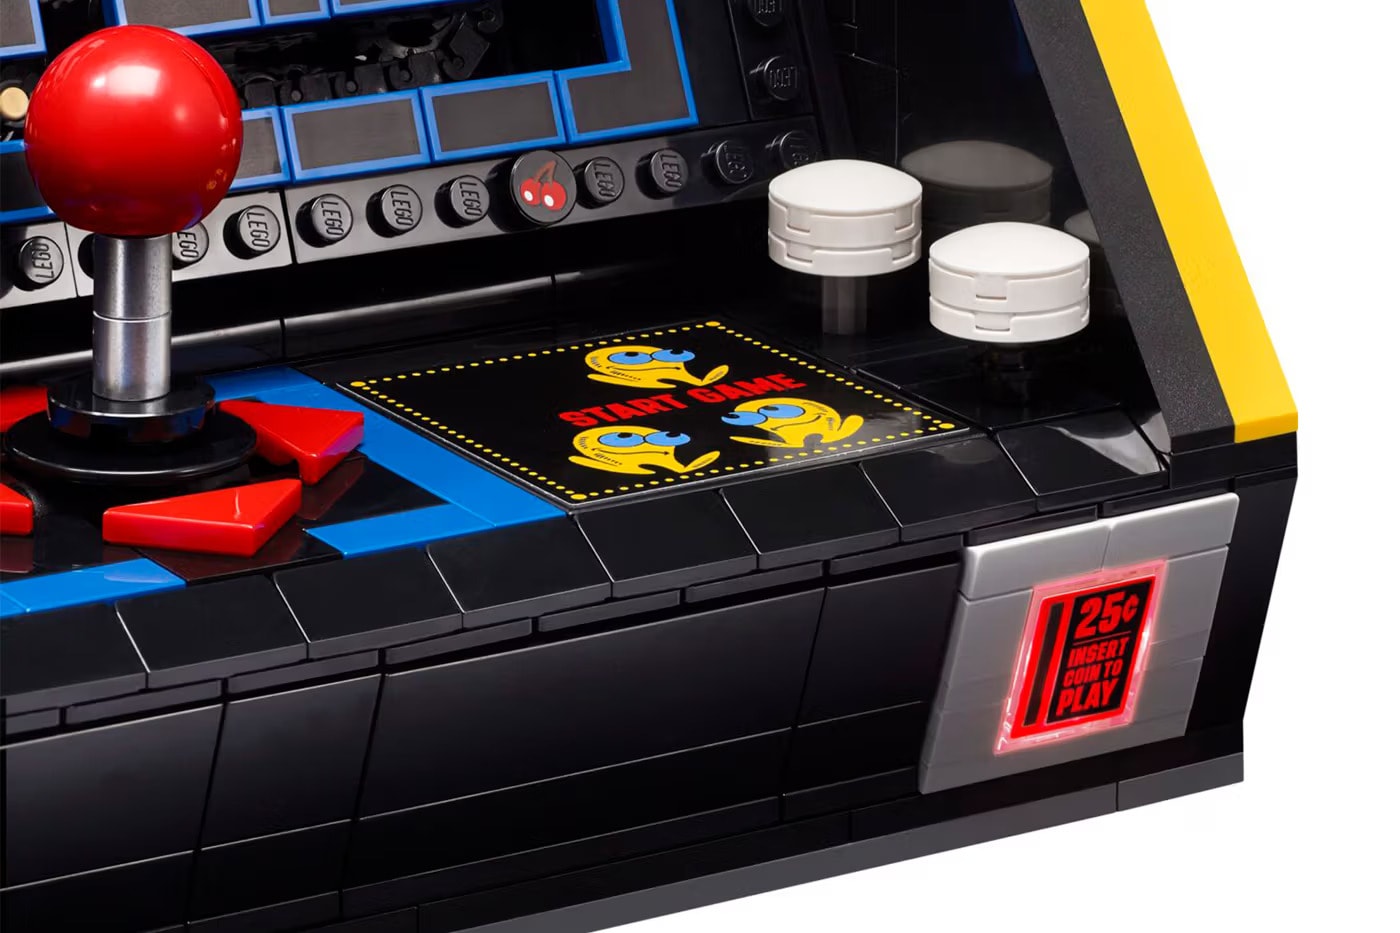 LEGO Pac-Man 吃豆人 聯乘系列 Crossover